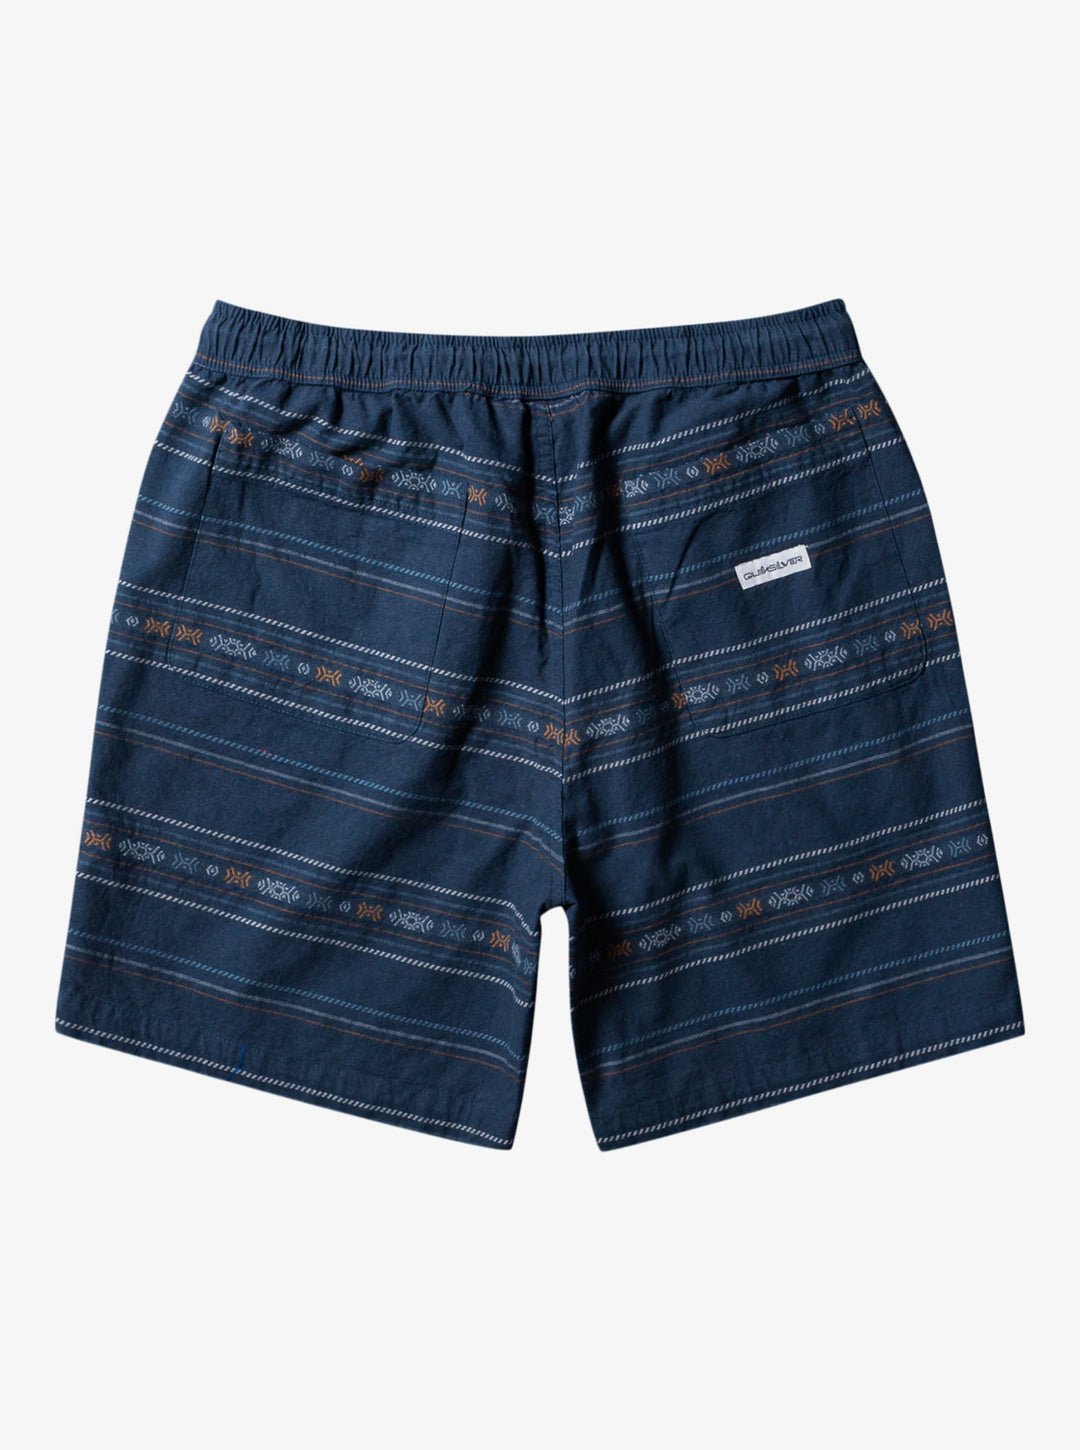 Quiksilver Taxer Jacquard Shorts - Midnight Navy Mini Jacquard - Sun Diego Boardshop